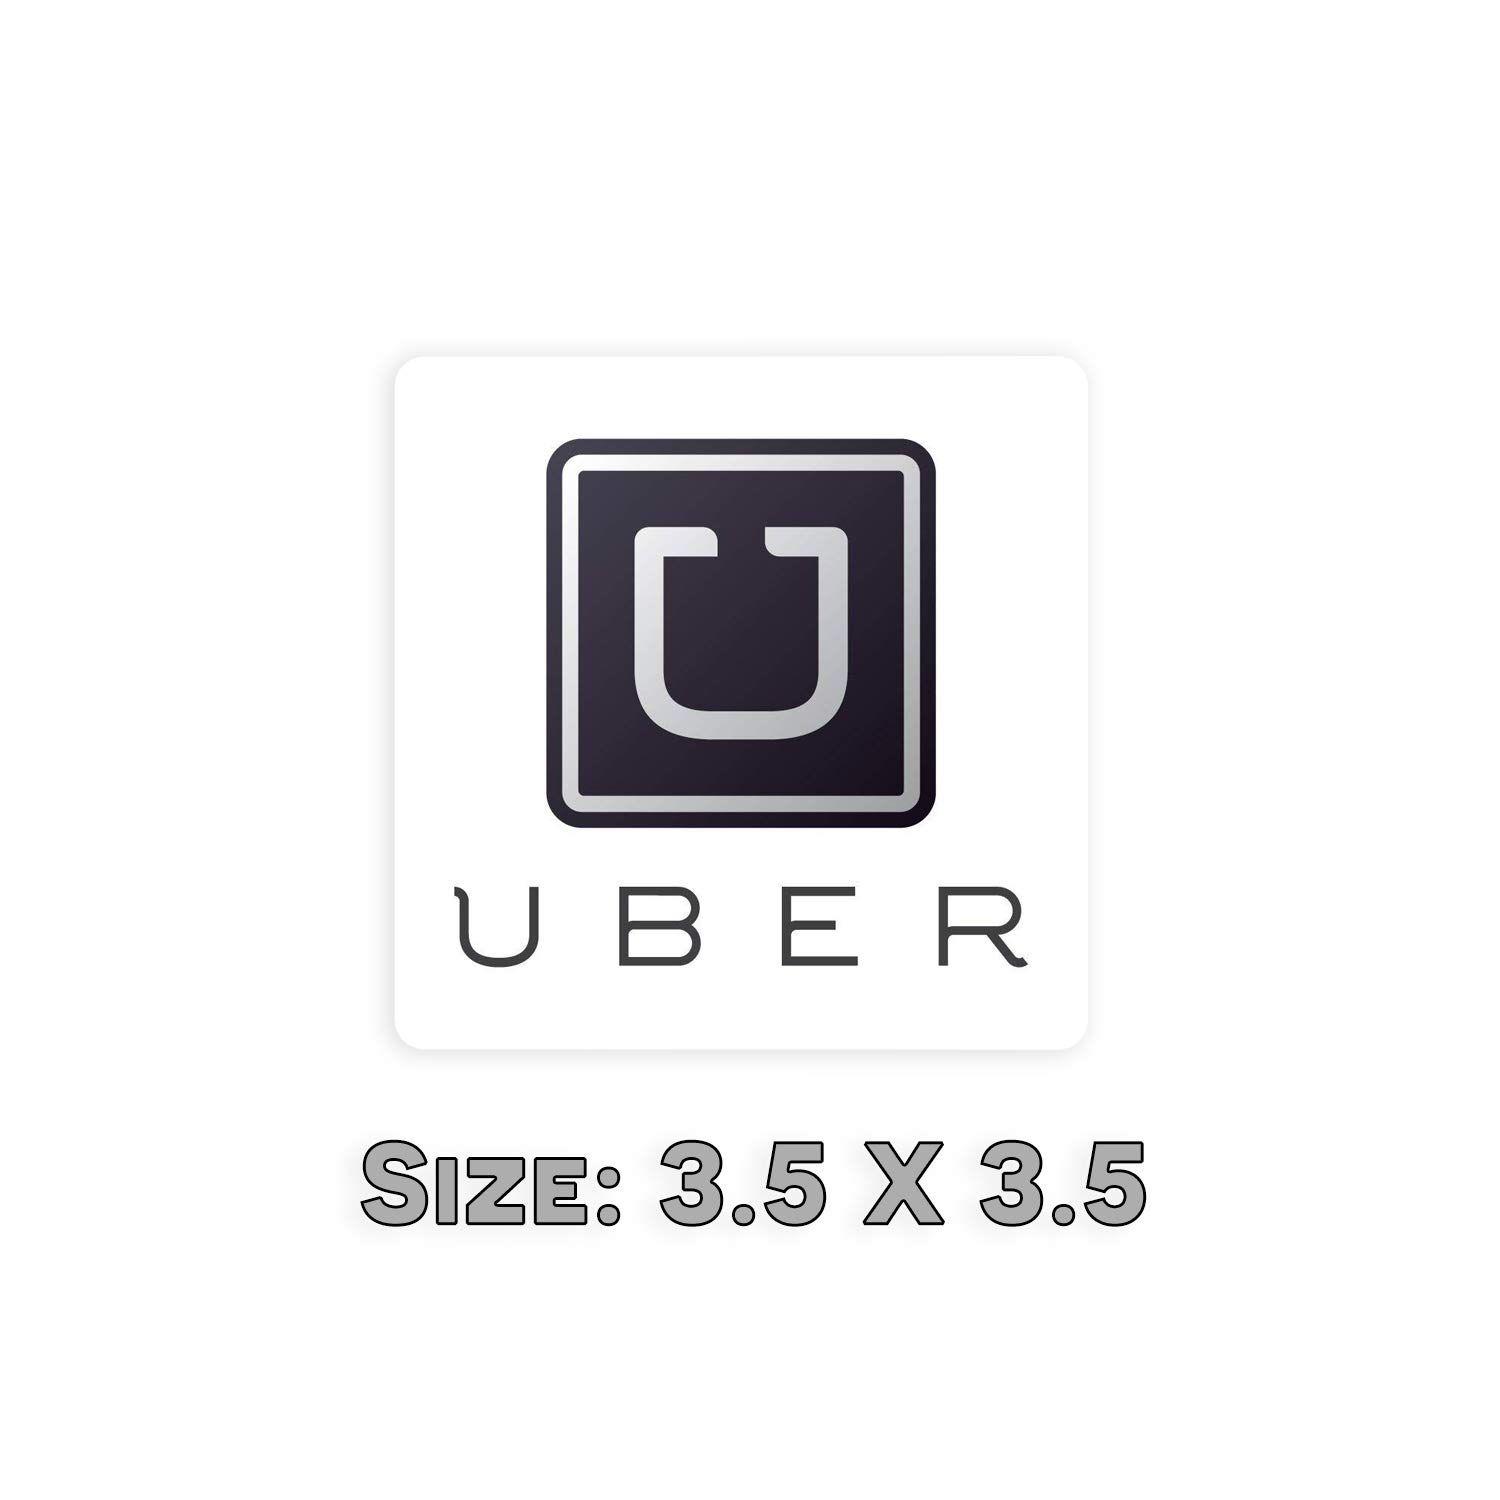 Uber Sticker Logo - Amazon.com: UBER CAR MAGNETS ~ 3.5 x 3.5 inches White Vehicle Magnet ...